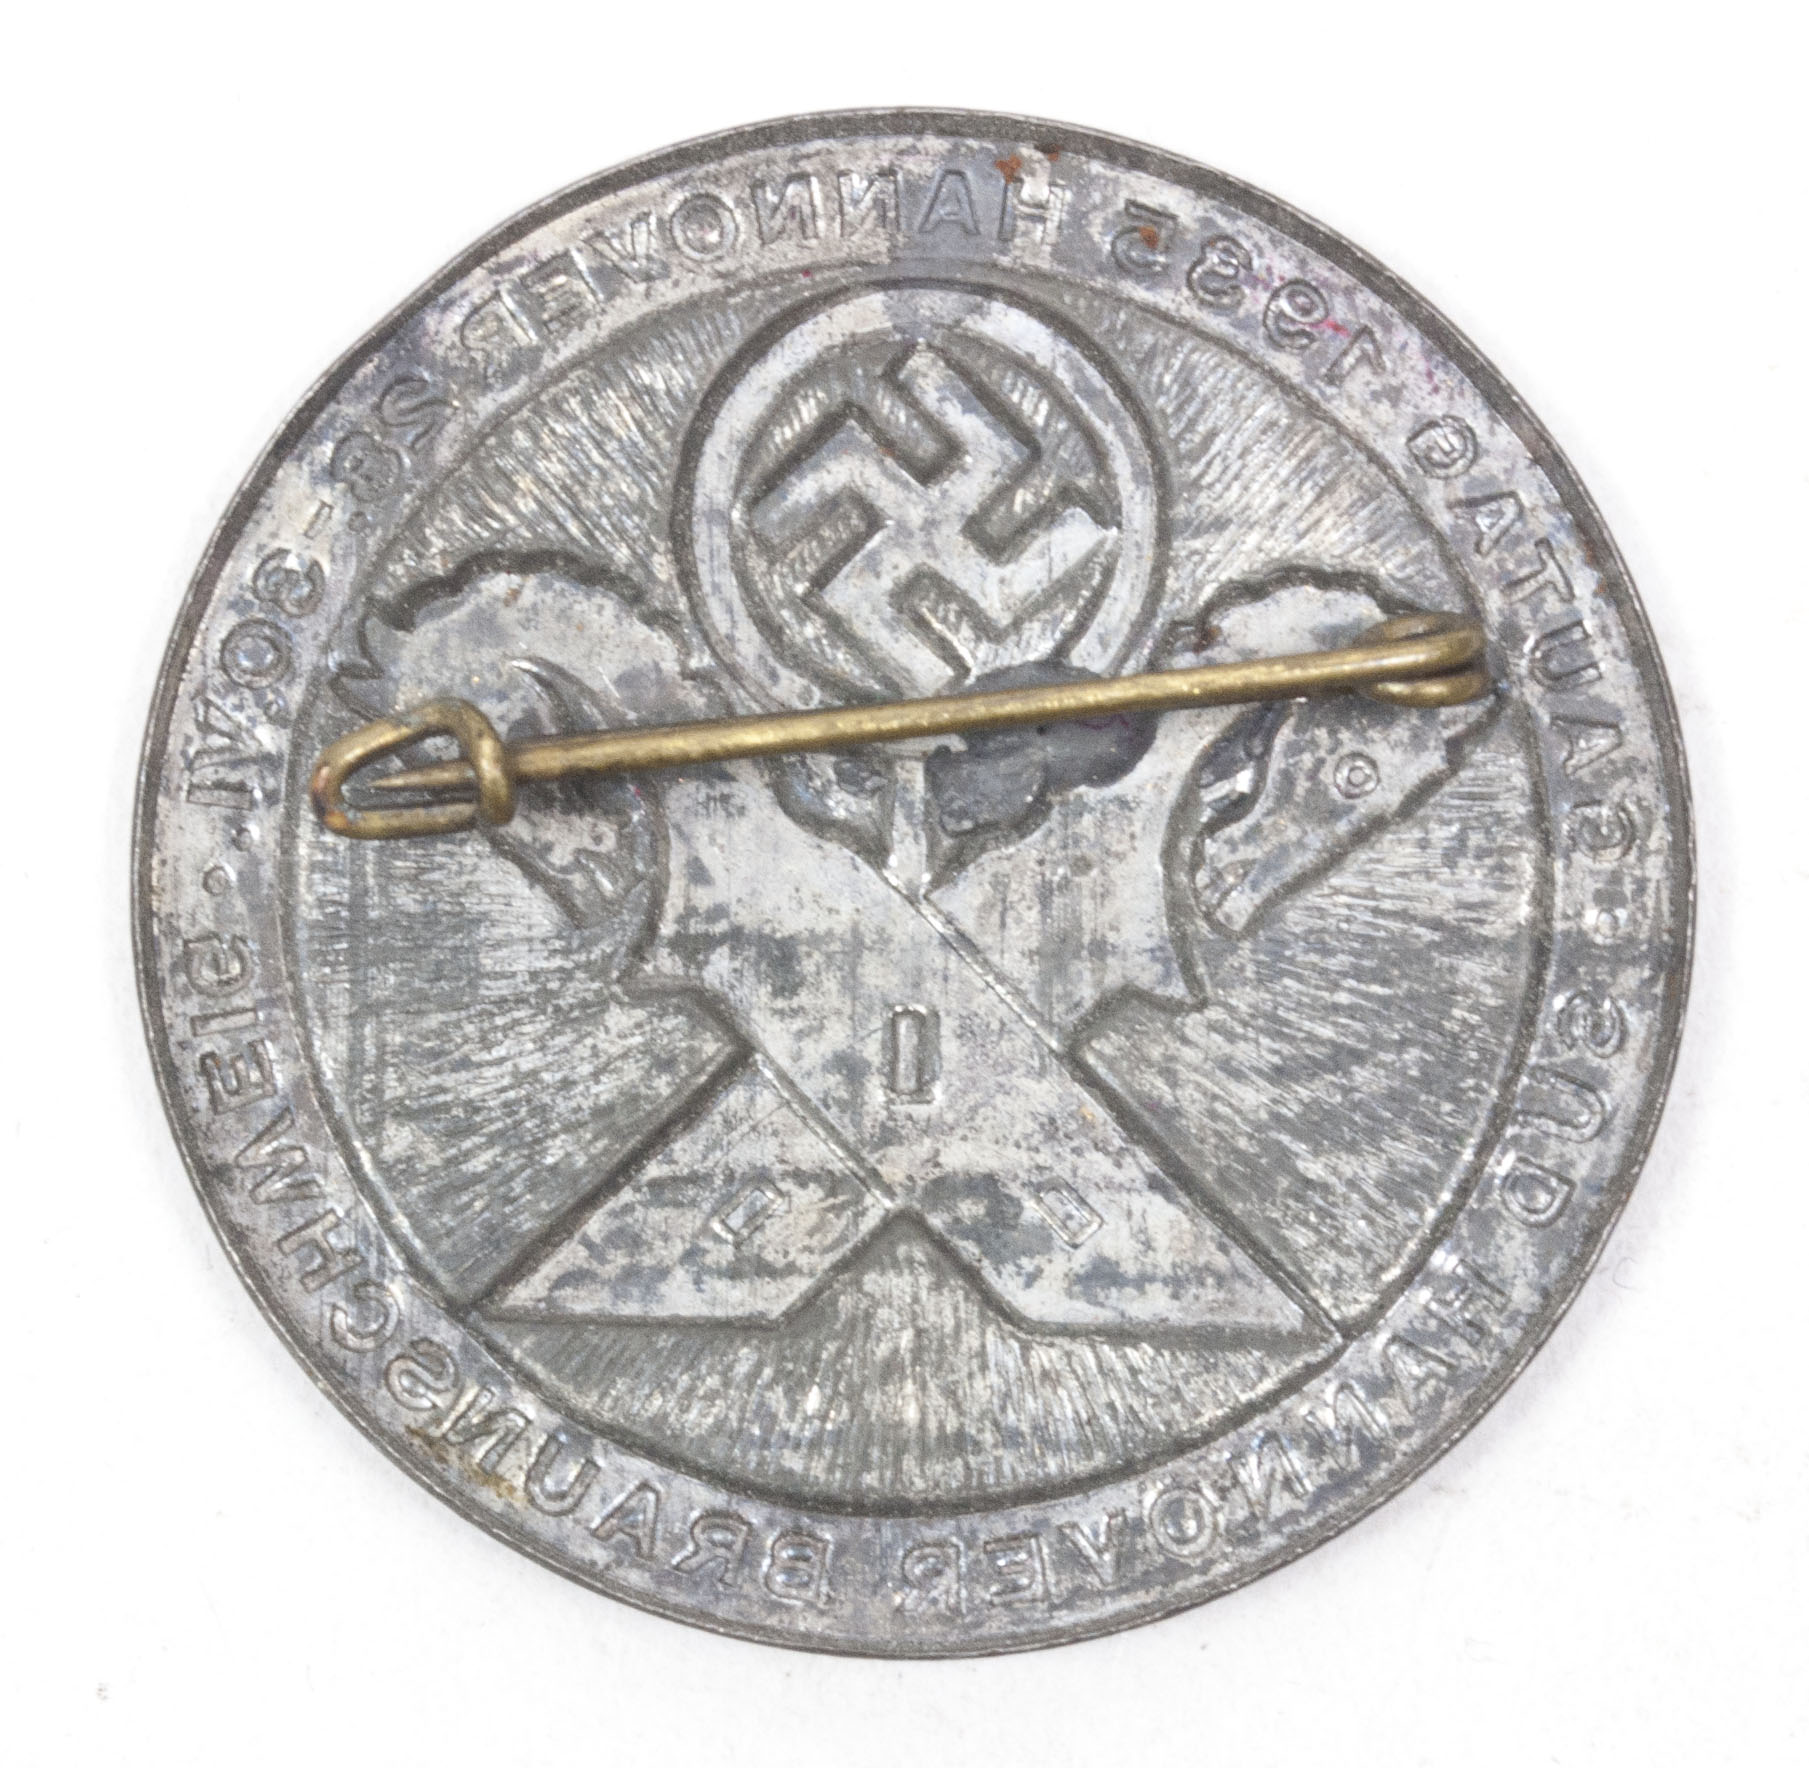 Gautag 1935 Hannover Braunschweig badge